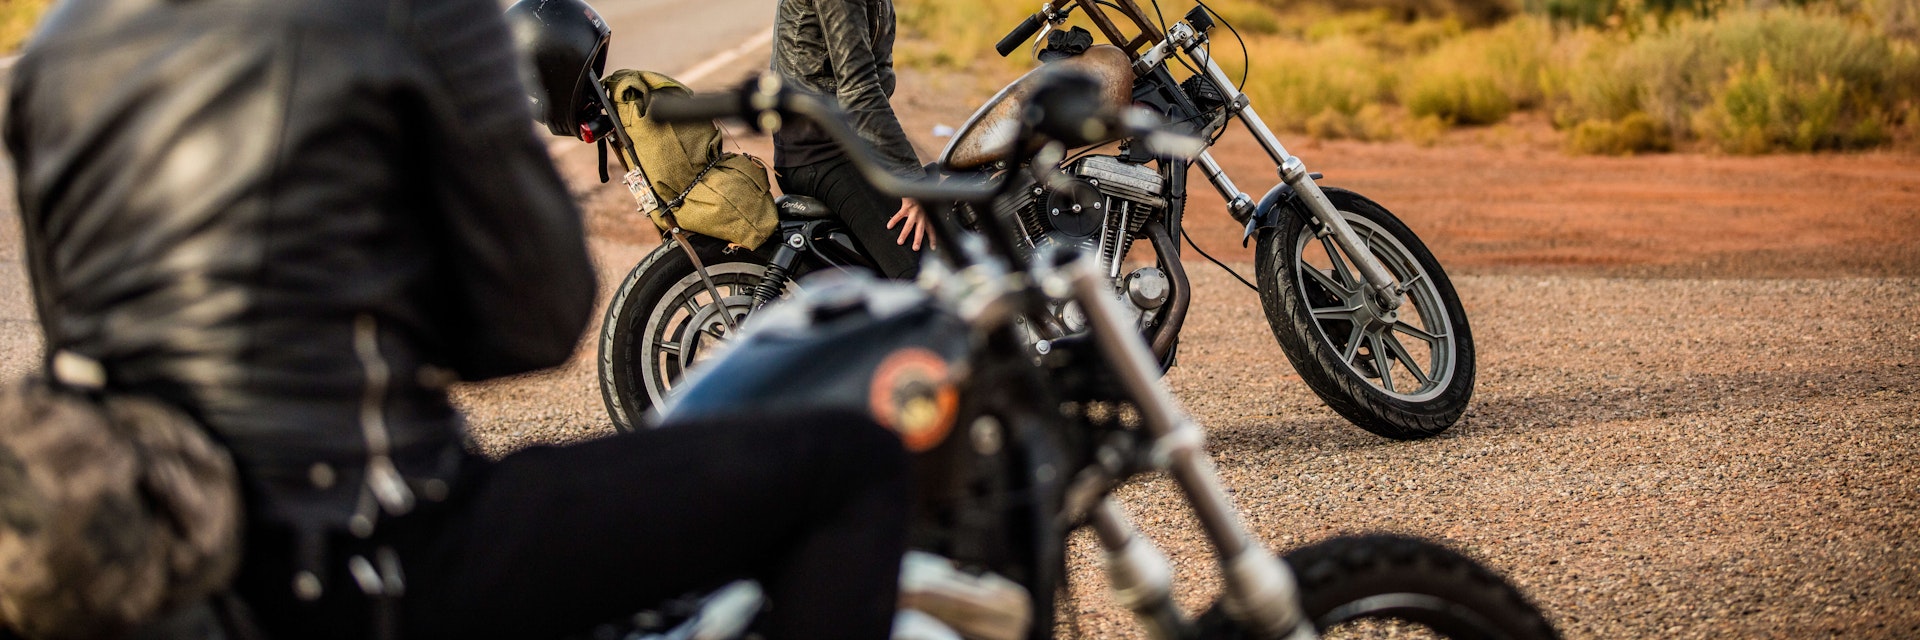 Motorcycing through Monument Valley, Utah.